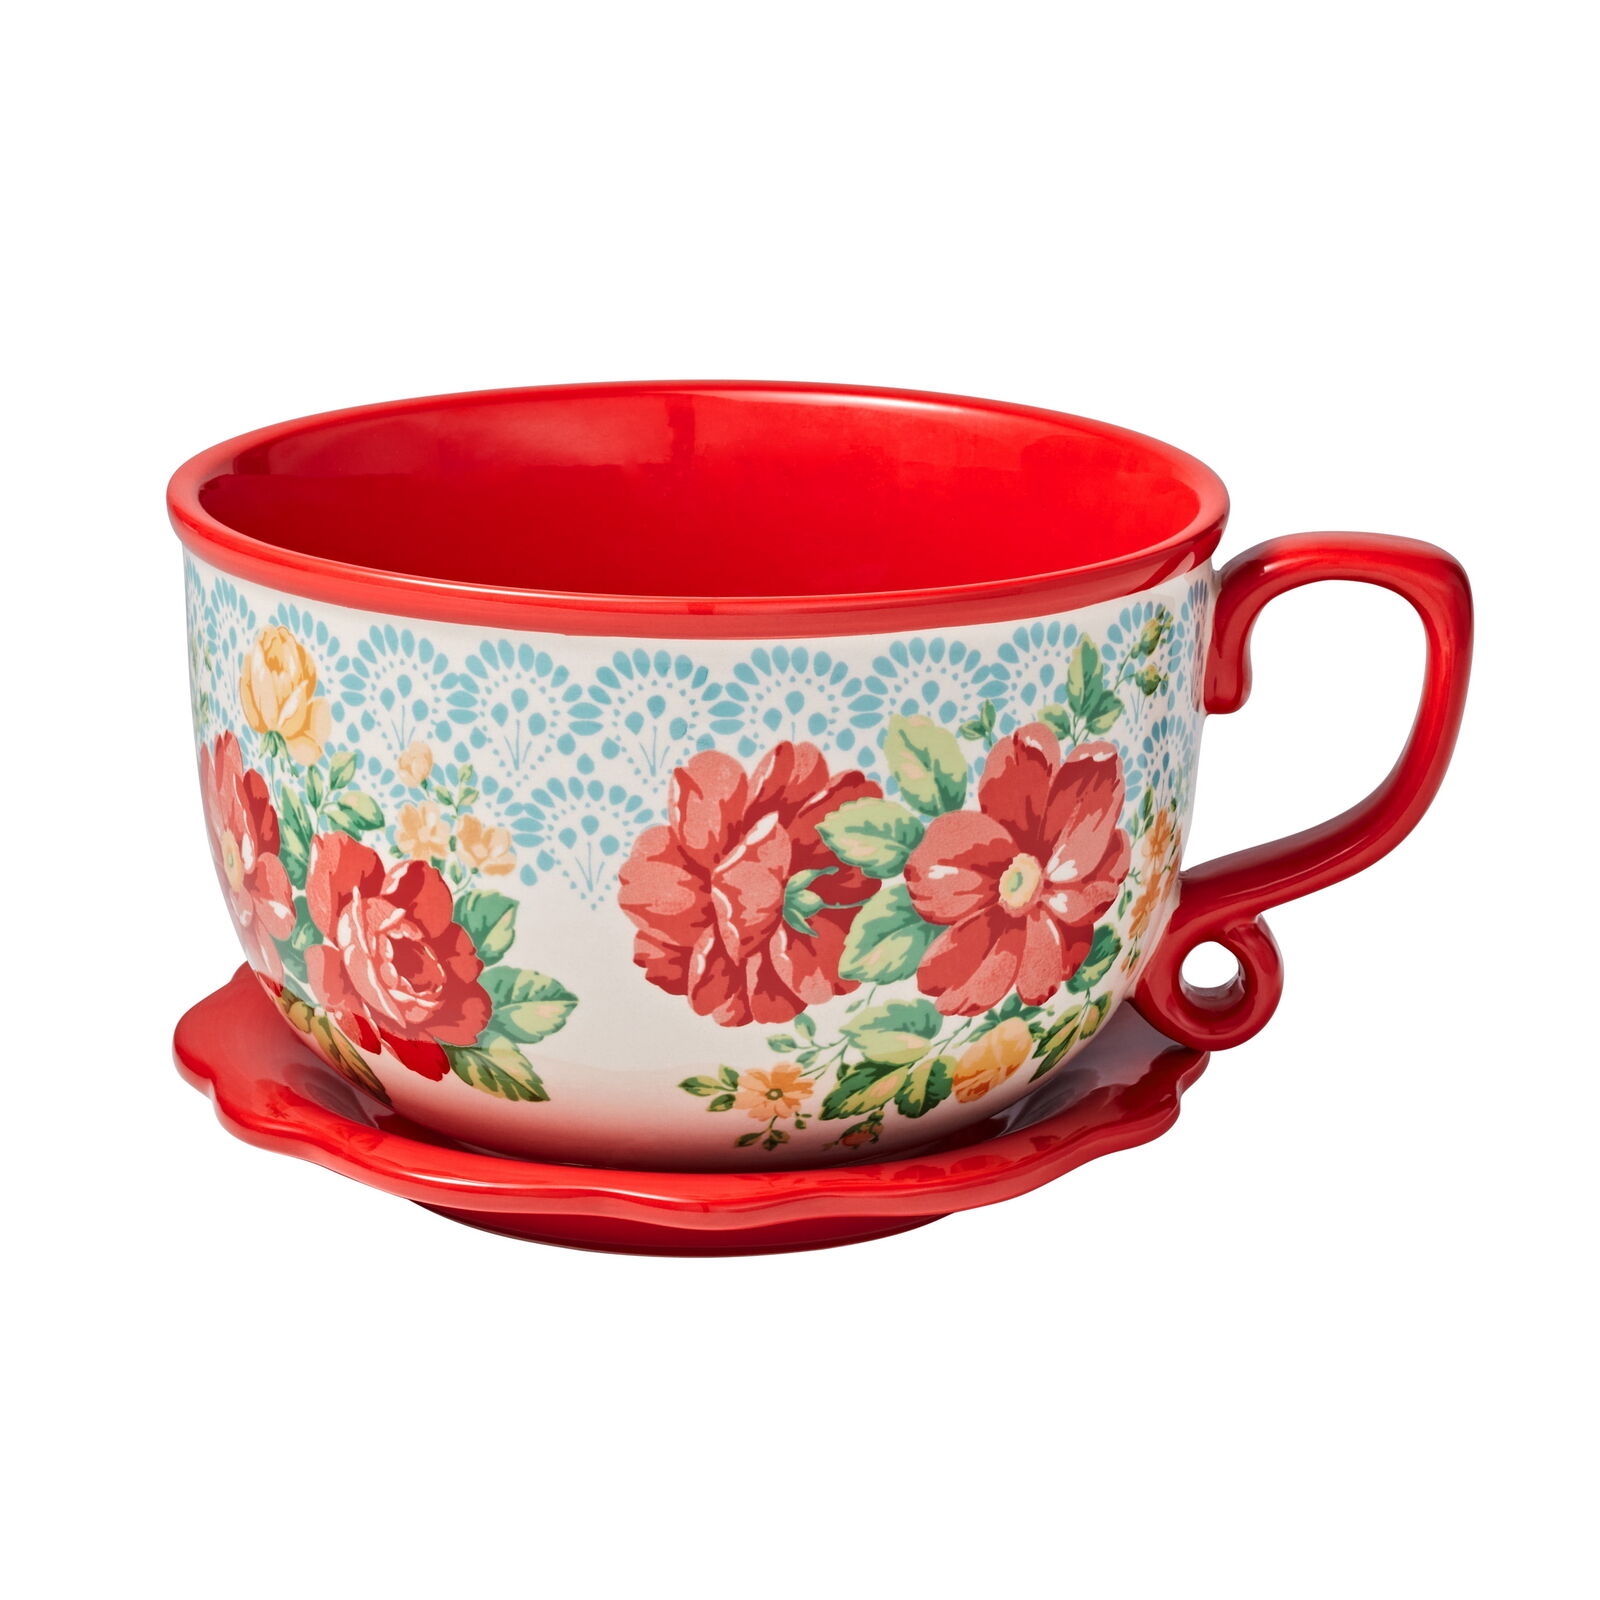 Vintage Floral 8-Inch Tea Cup Ceramic Planter, Red